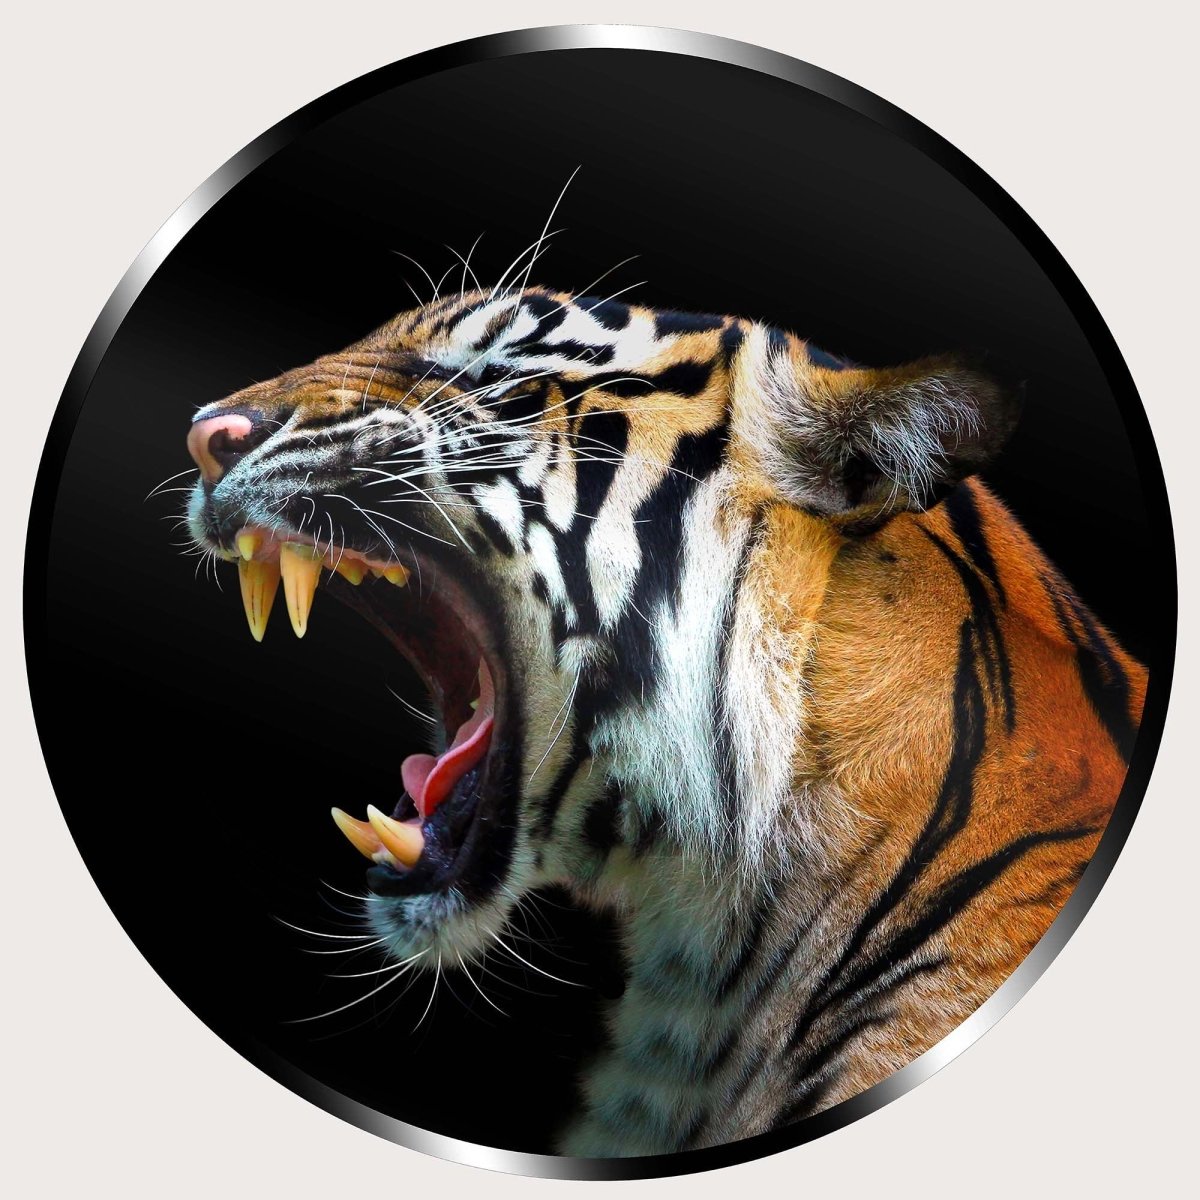 Illuminated Wall Art - Angry Tiger - madaboutneon